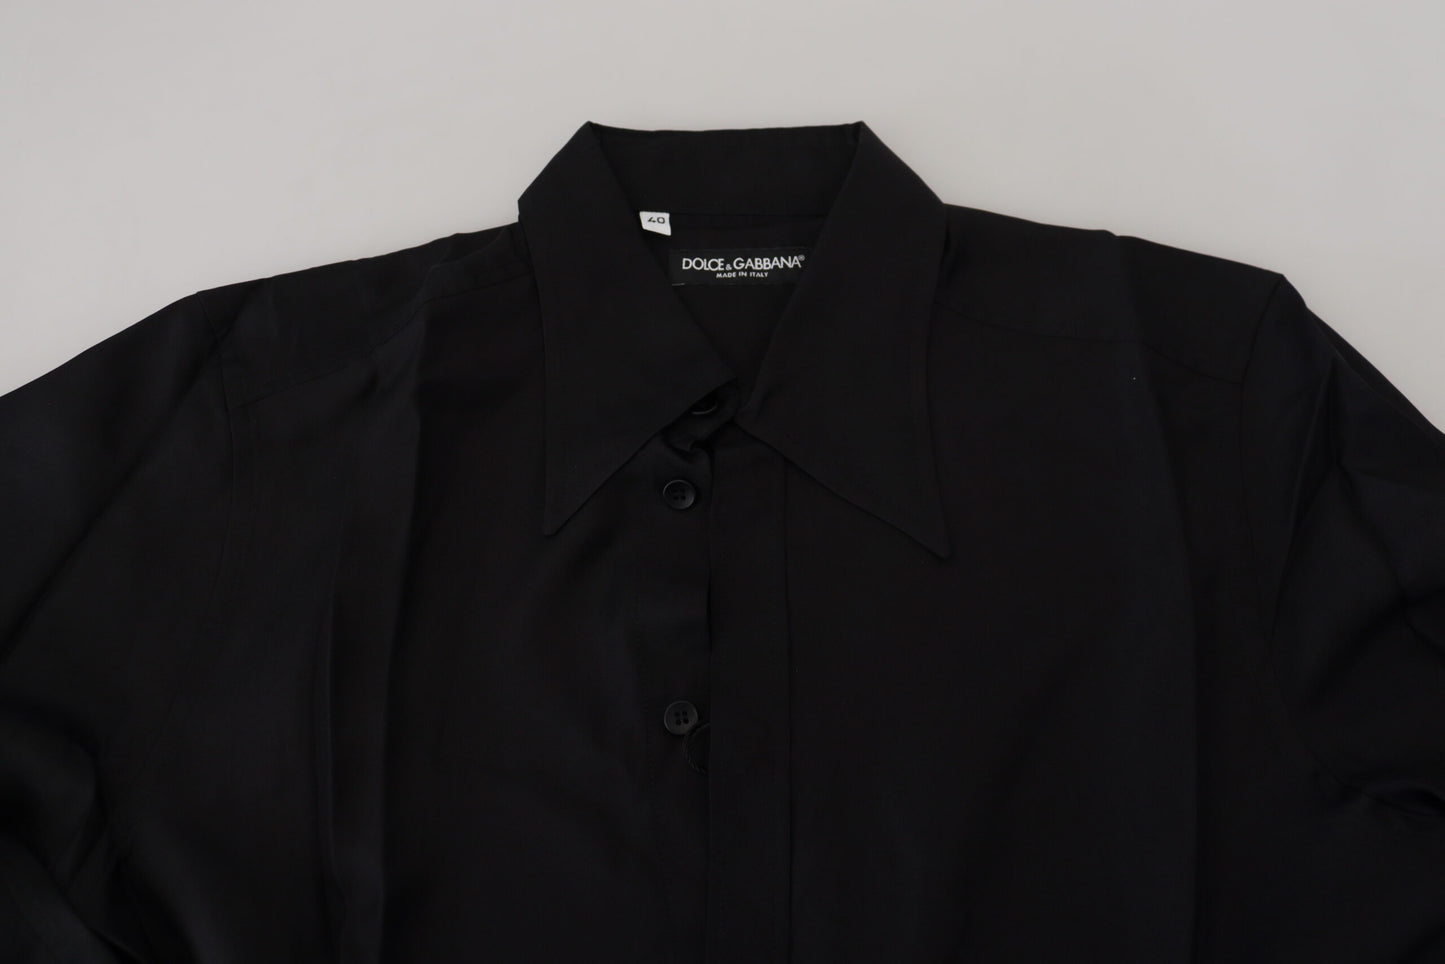 Sleek Silk Black Dress Shirt Slim Fit